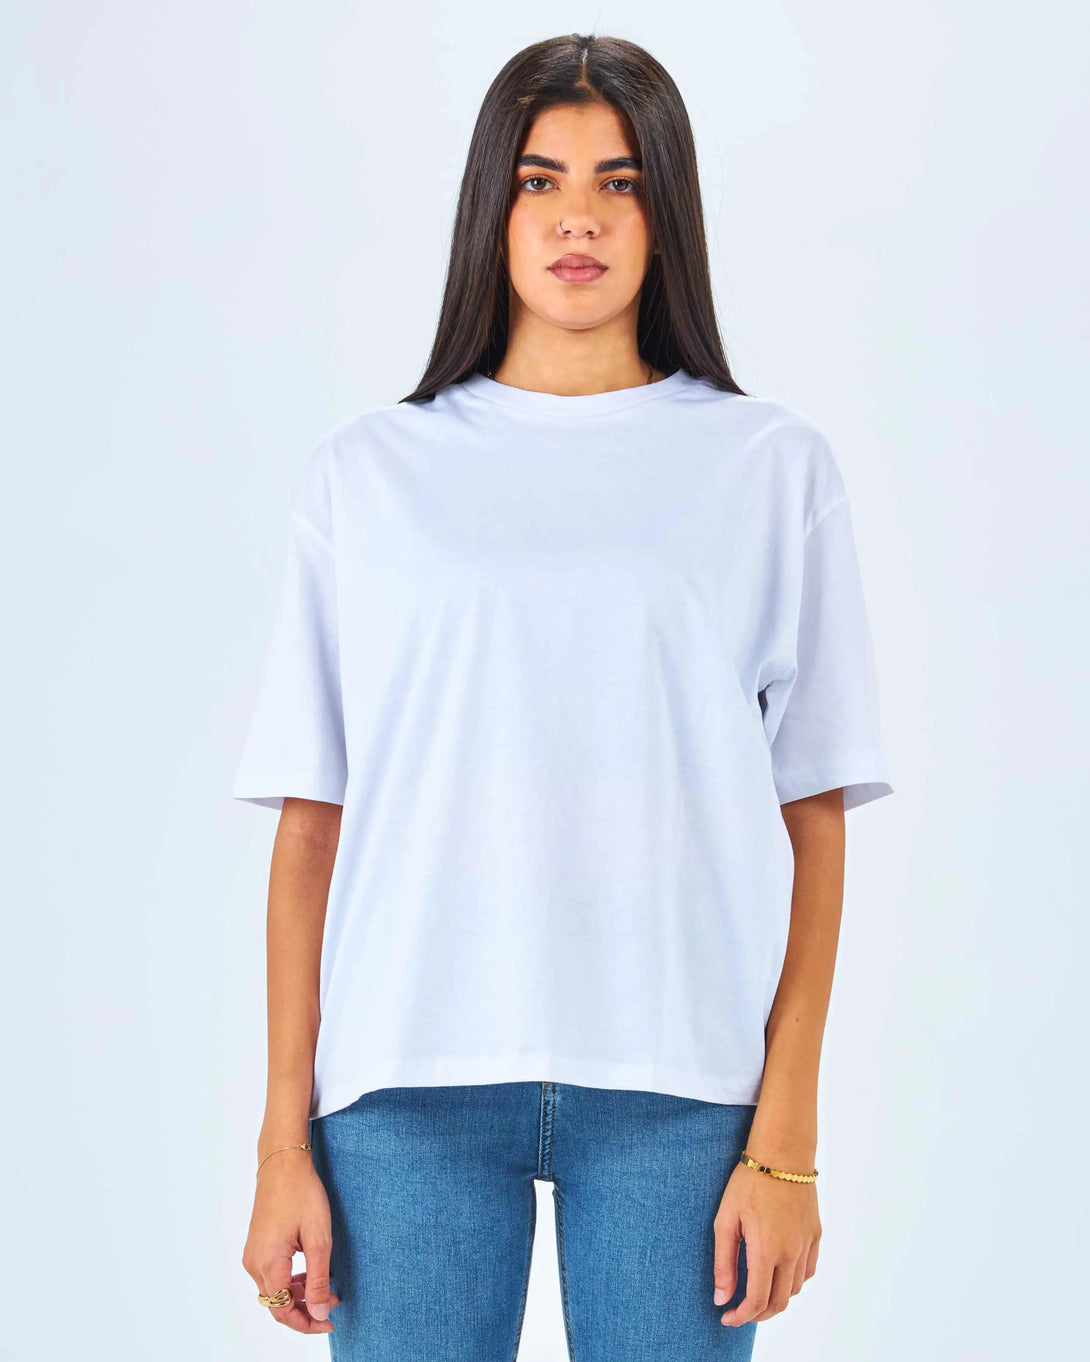 Oversized White Cotton T-Shirt.